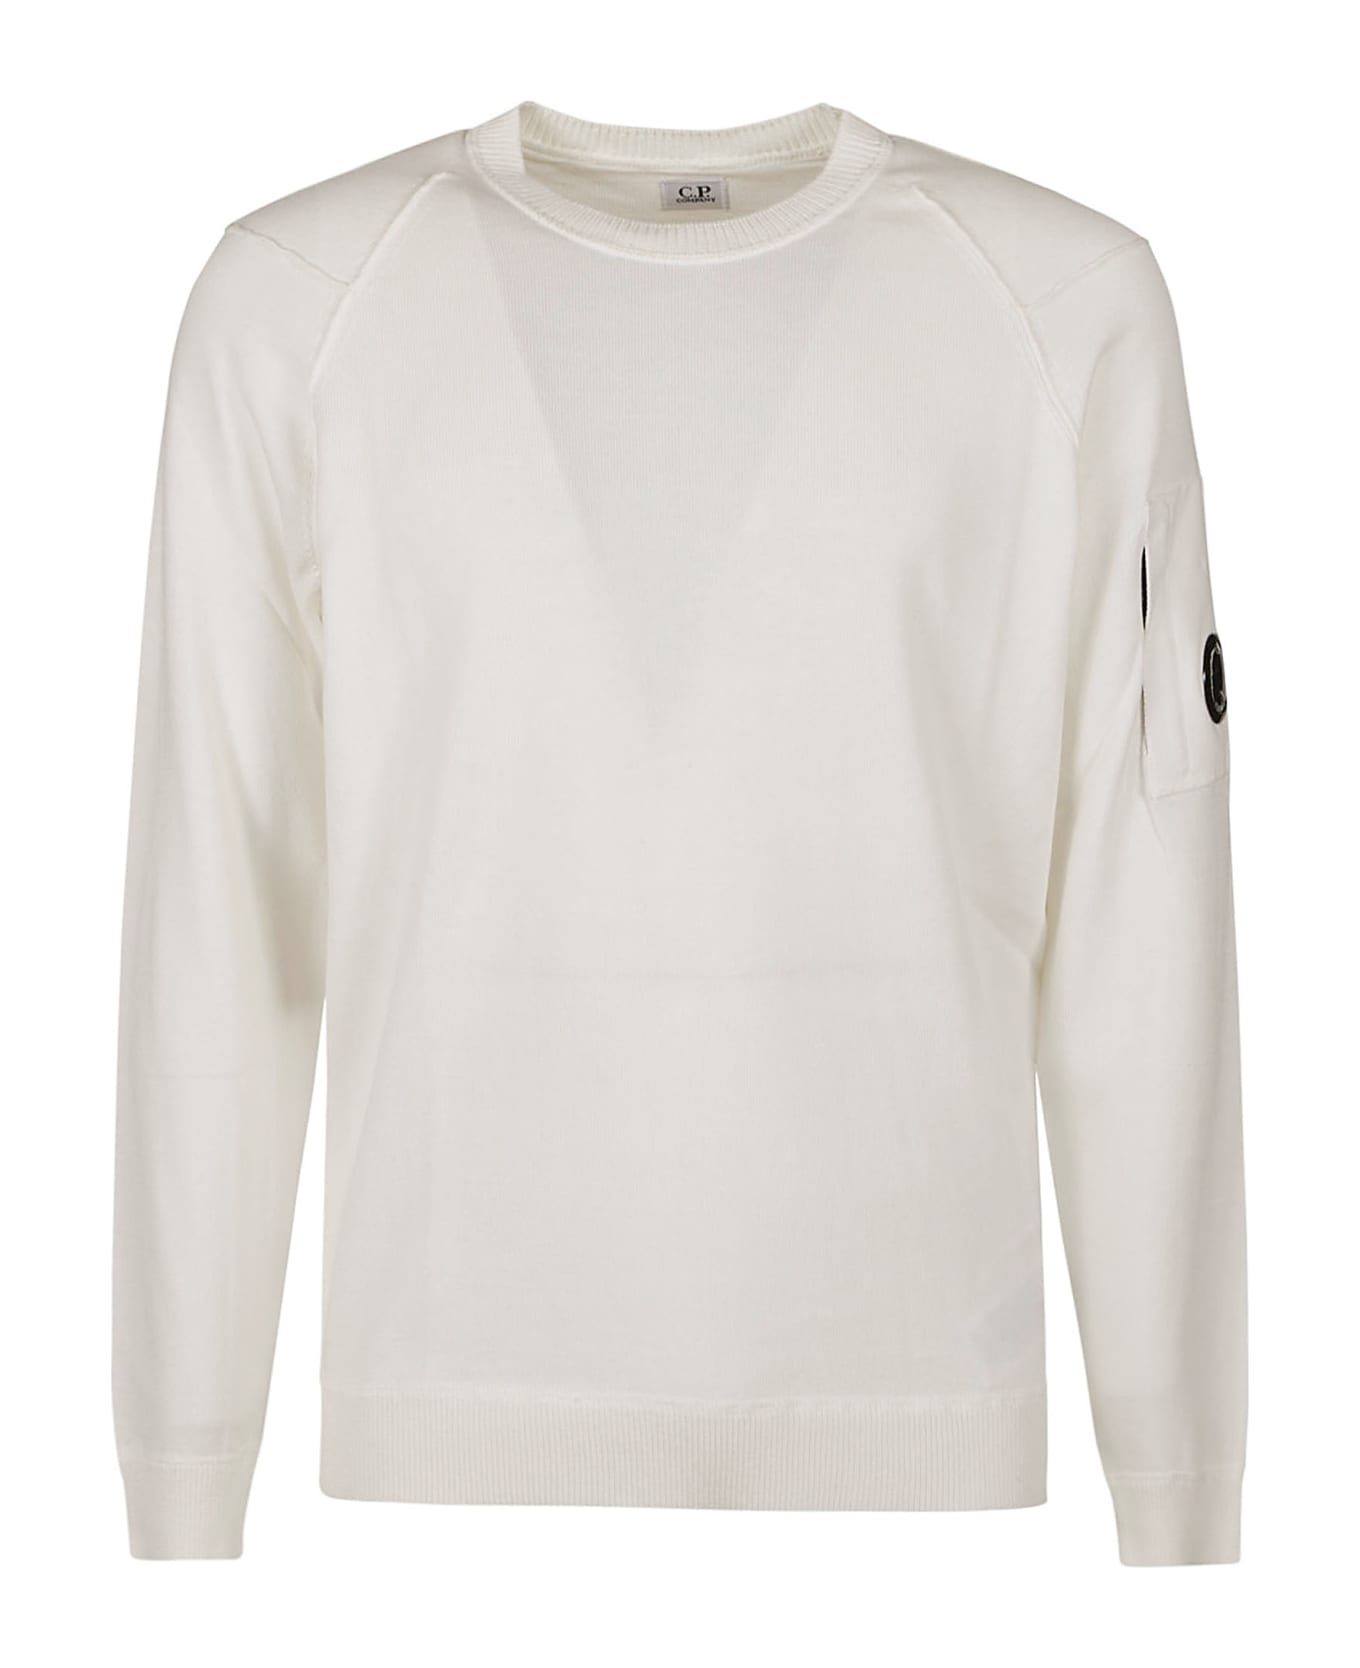 C.P. Company Sea Island Crewneck Sweatshirt - GAUZE WHITE